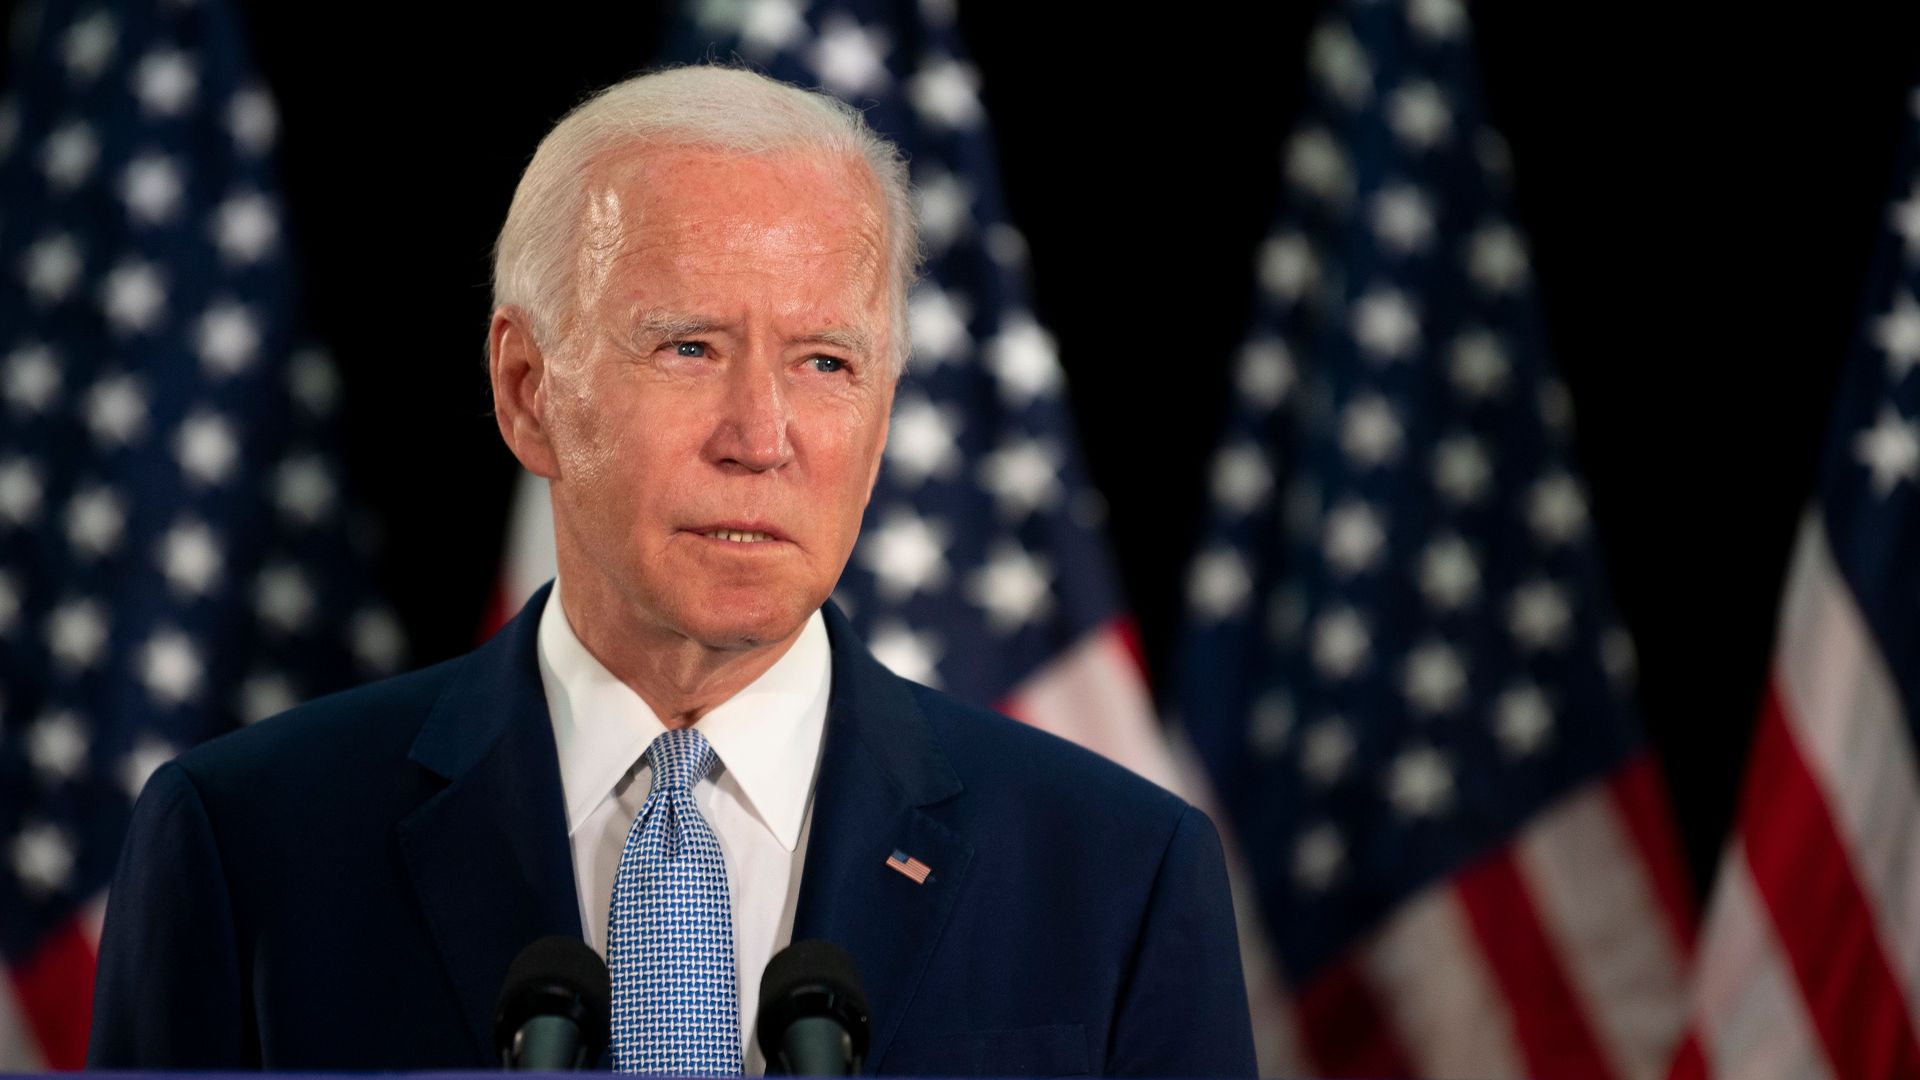 Joe Biden stands in front of American flags in a suit